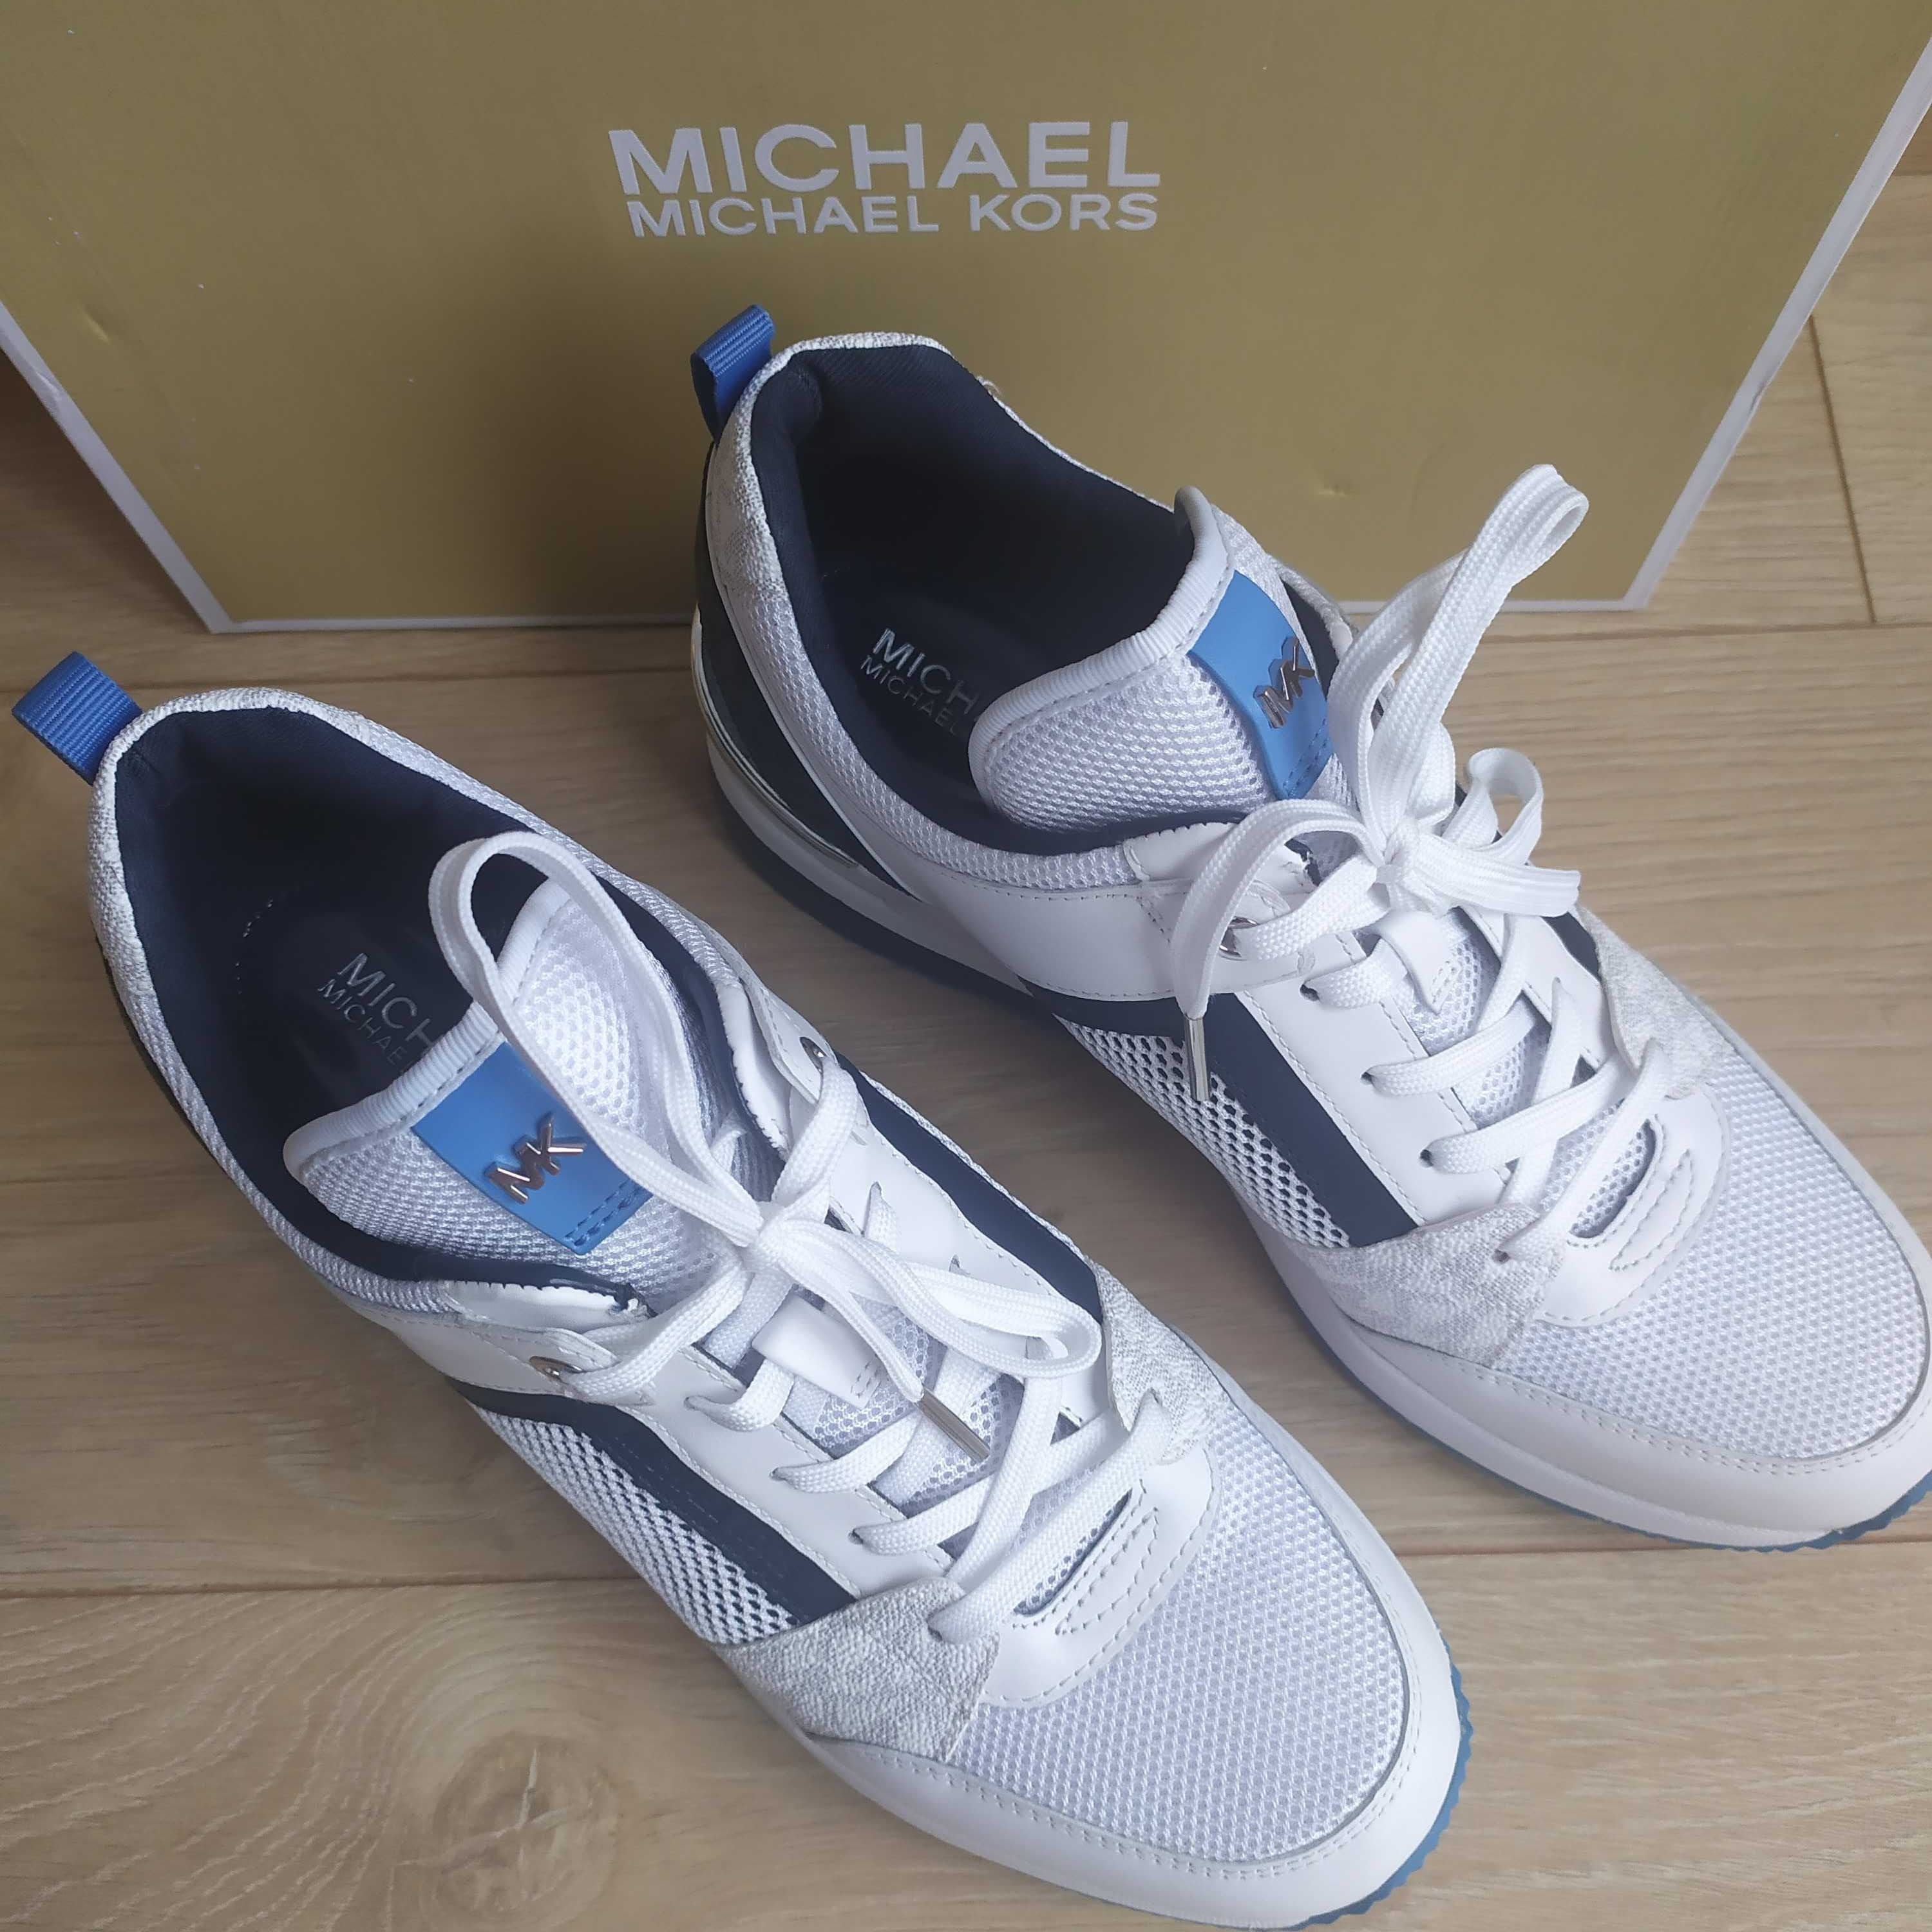 Michael Kors trainer buty damskie adidasy sportowe na platformie 40